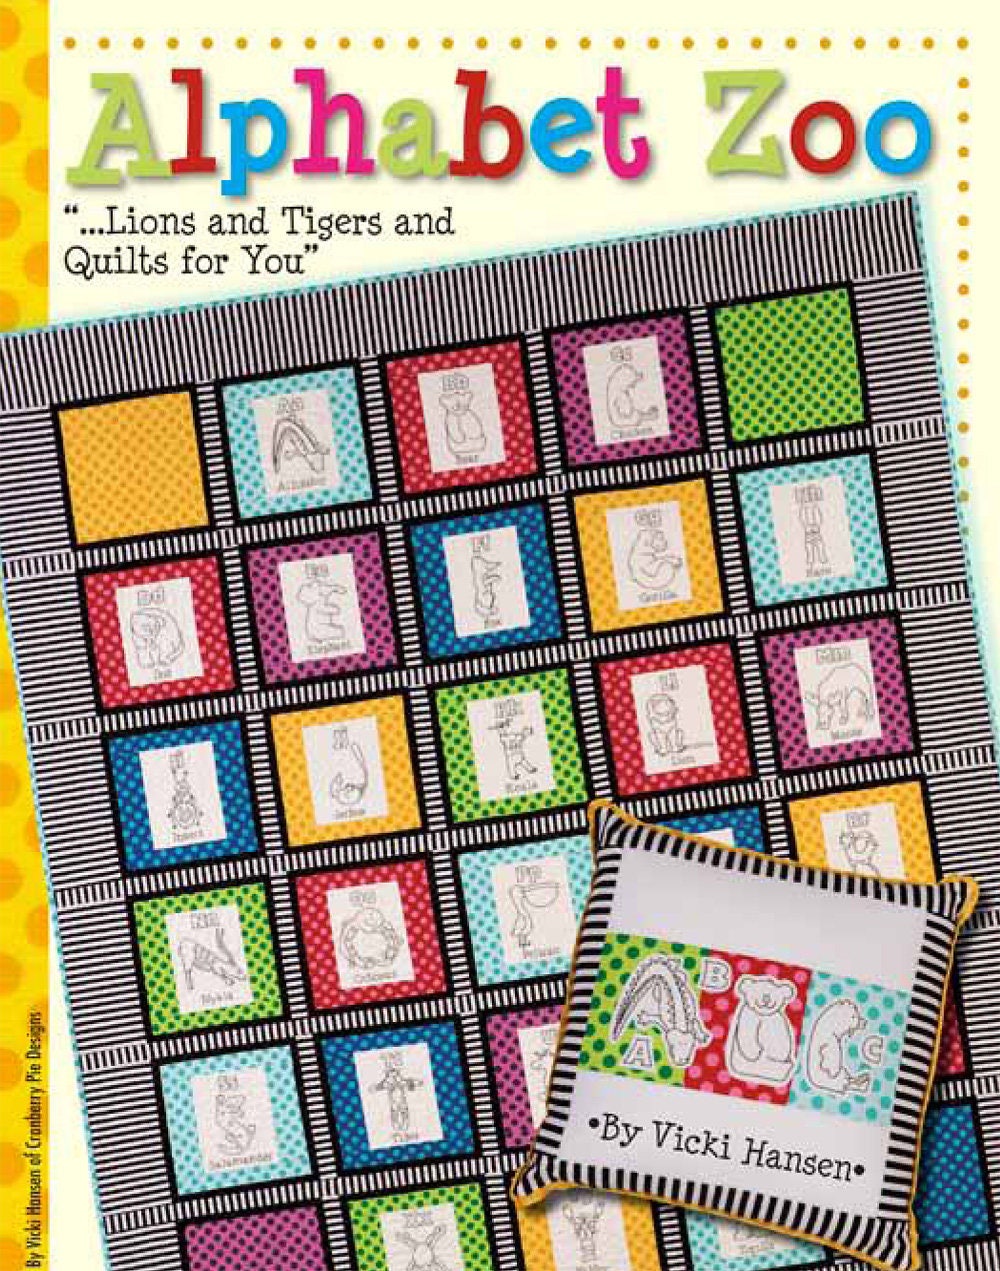 Alphabet Zoo Quilt Pattern Book by Vicki Hansen for Kansas City Star Quilts